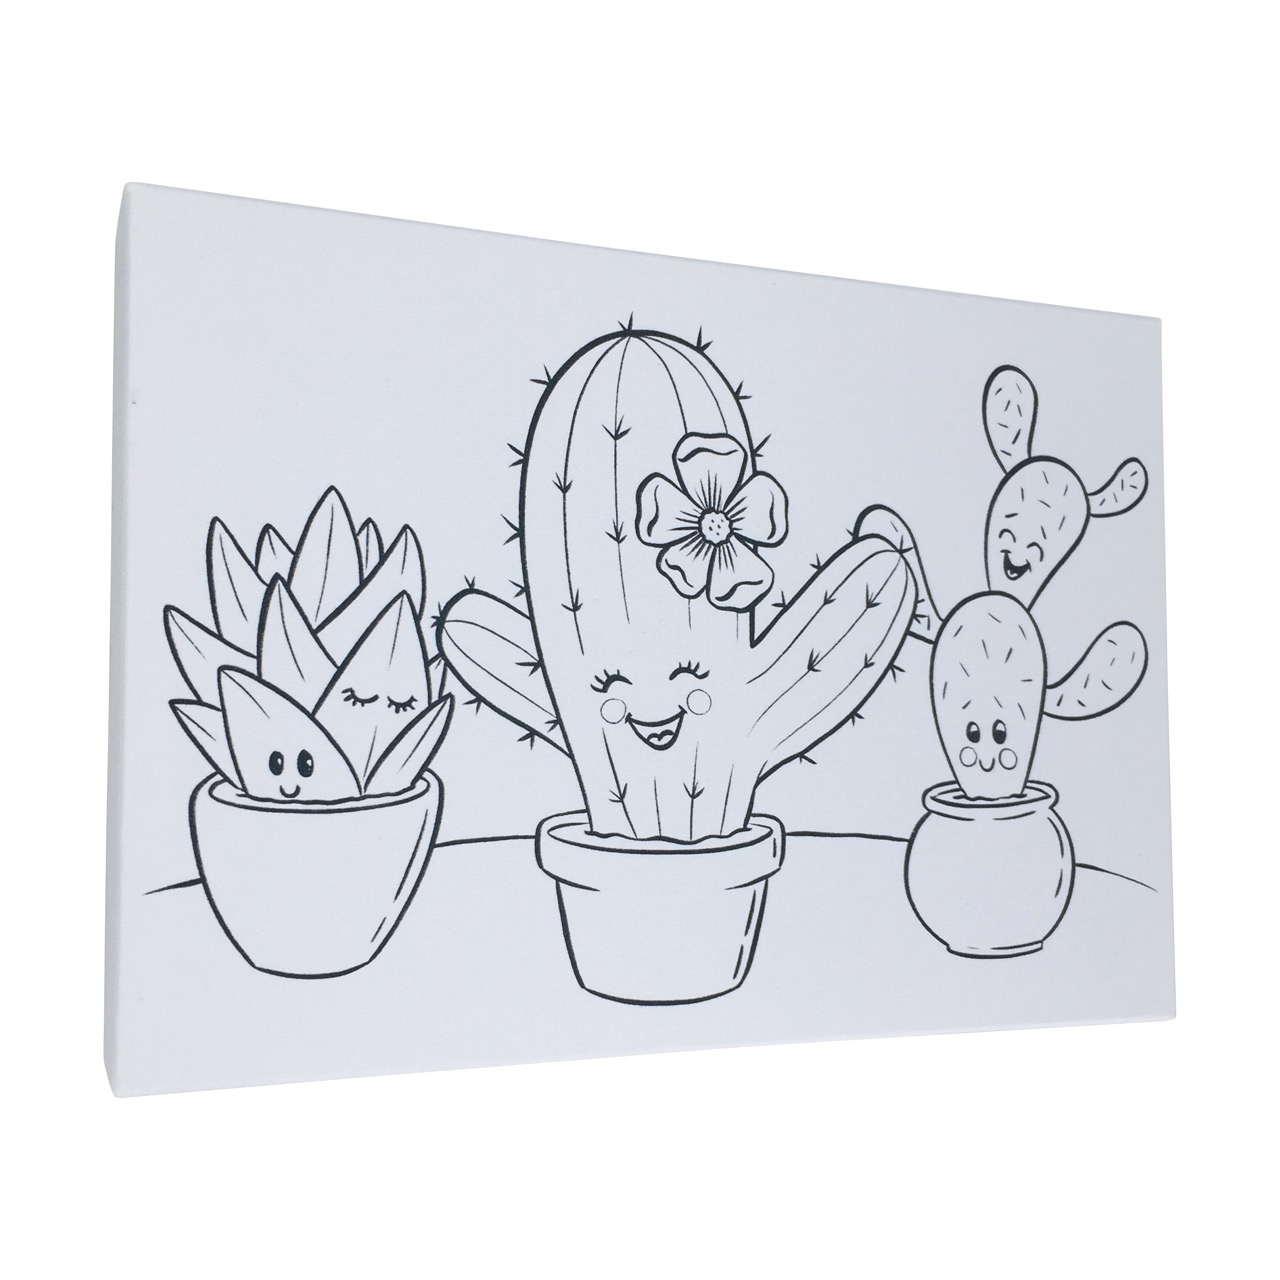 Buntbox Frame M (21 cm x 14.8 cm) con cactus felici per colorare